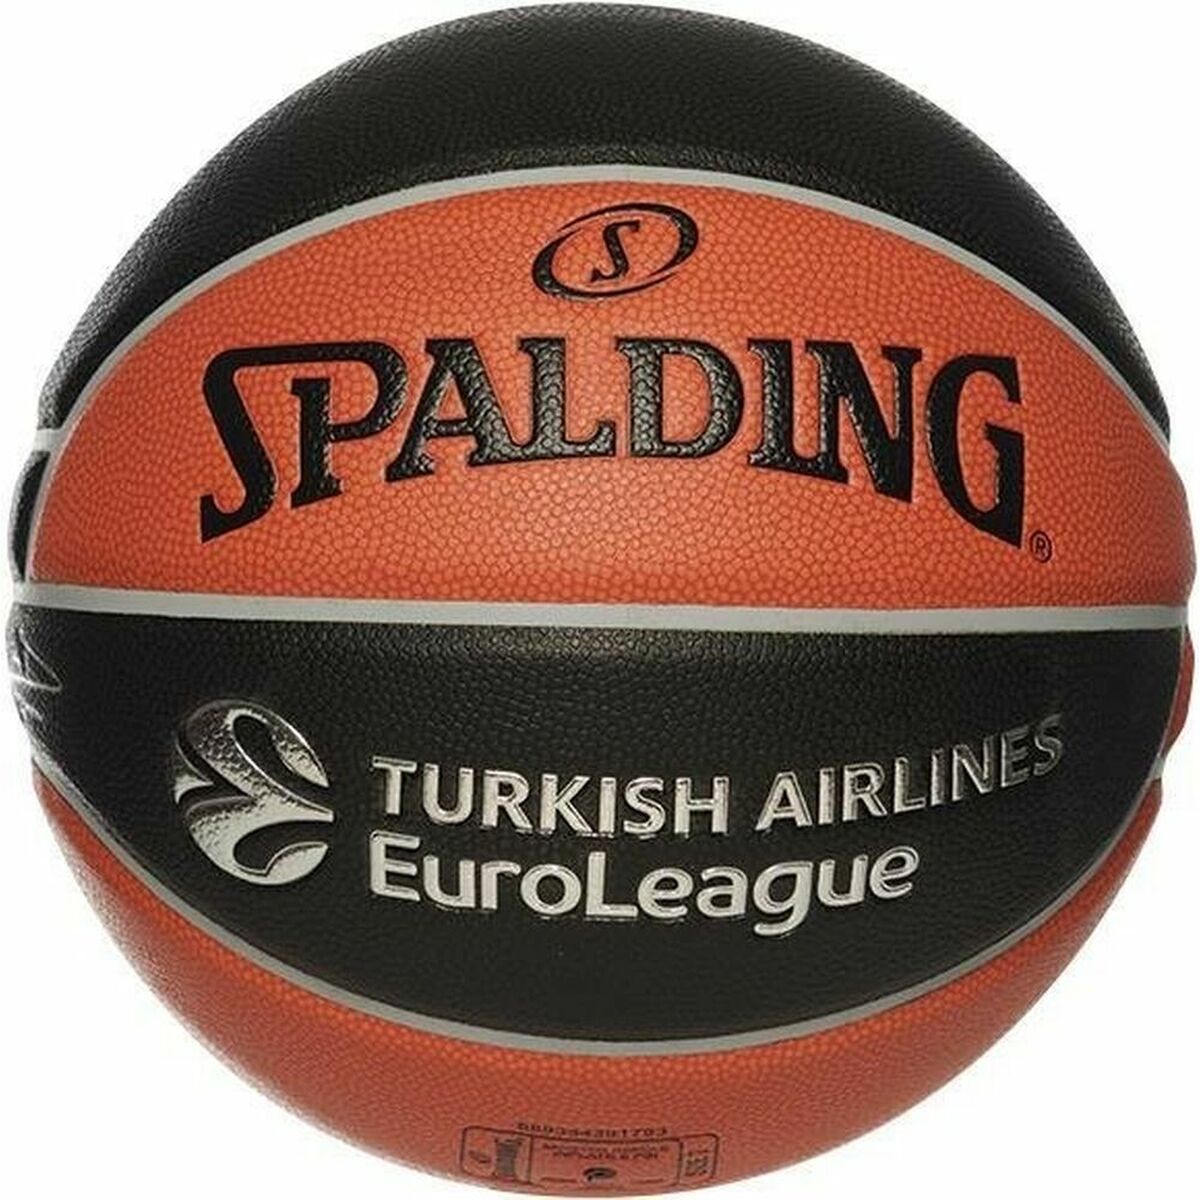 Bola De Basquetebol Spalding Tf-1000 Legacy Turkish Airlines Euroleague